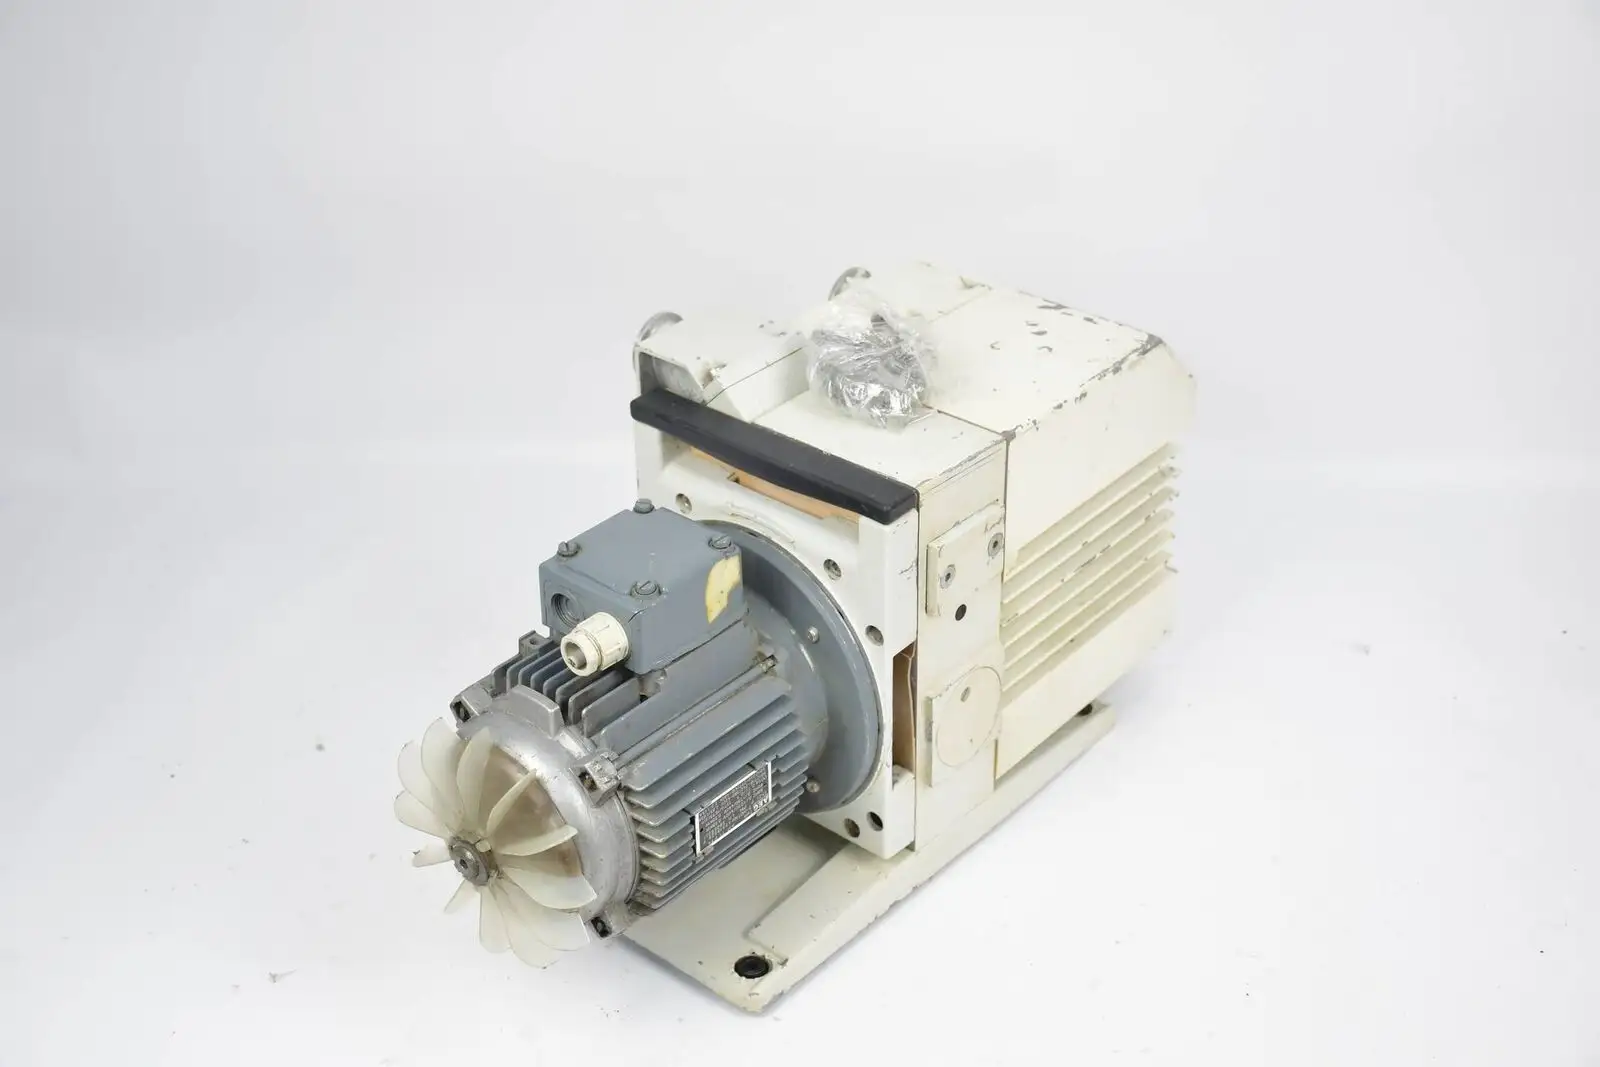 Leybold Trivac vacuum pump S16B incl. AEG 3 phase motor AM 71 FY4-